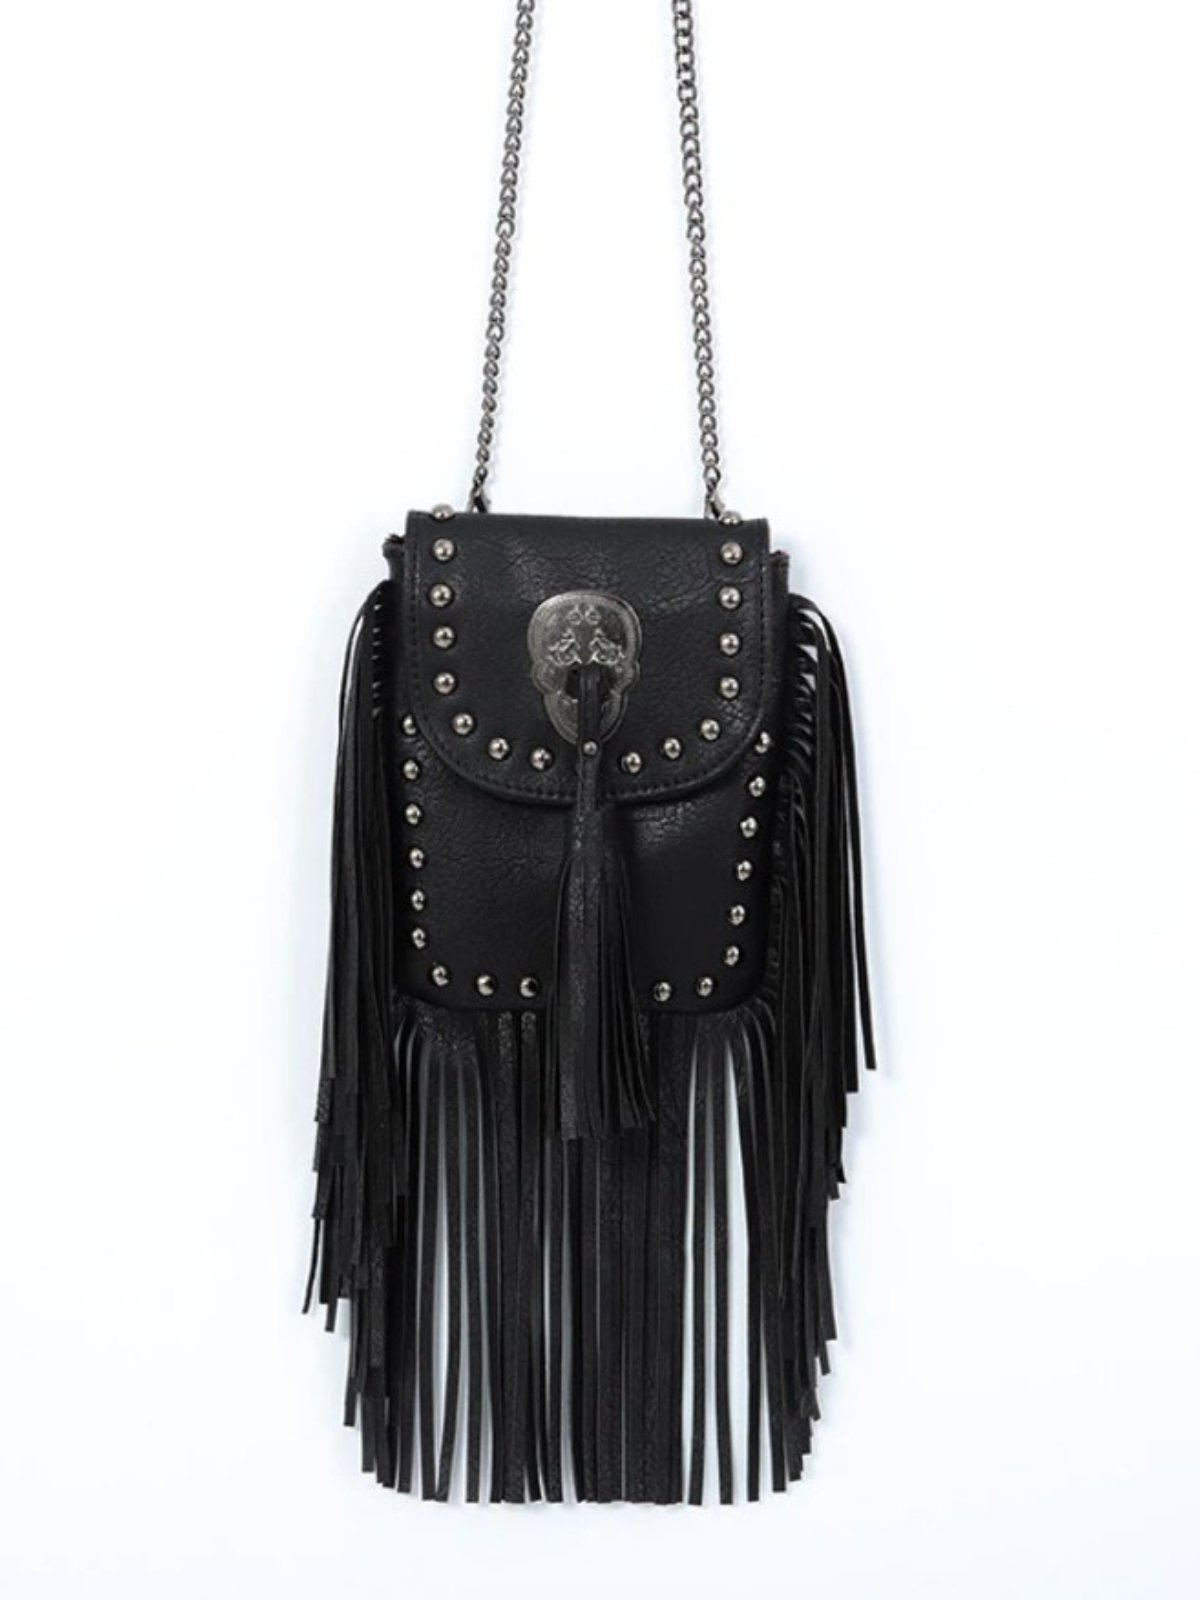 Girls Clothing Accessories | Bohemian Studded Fringe Crossbody Bag ...